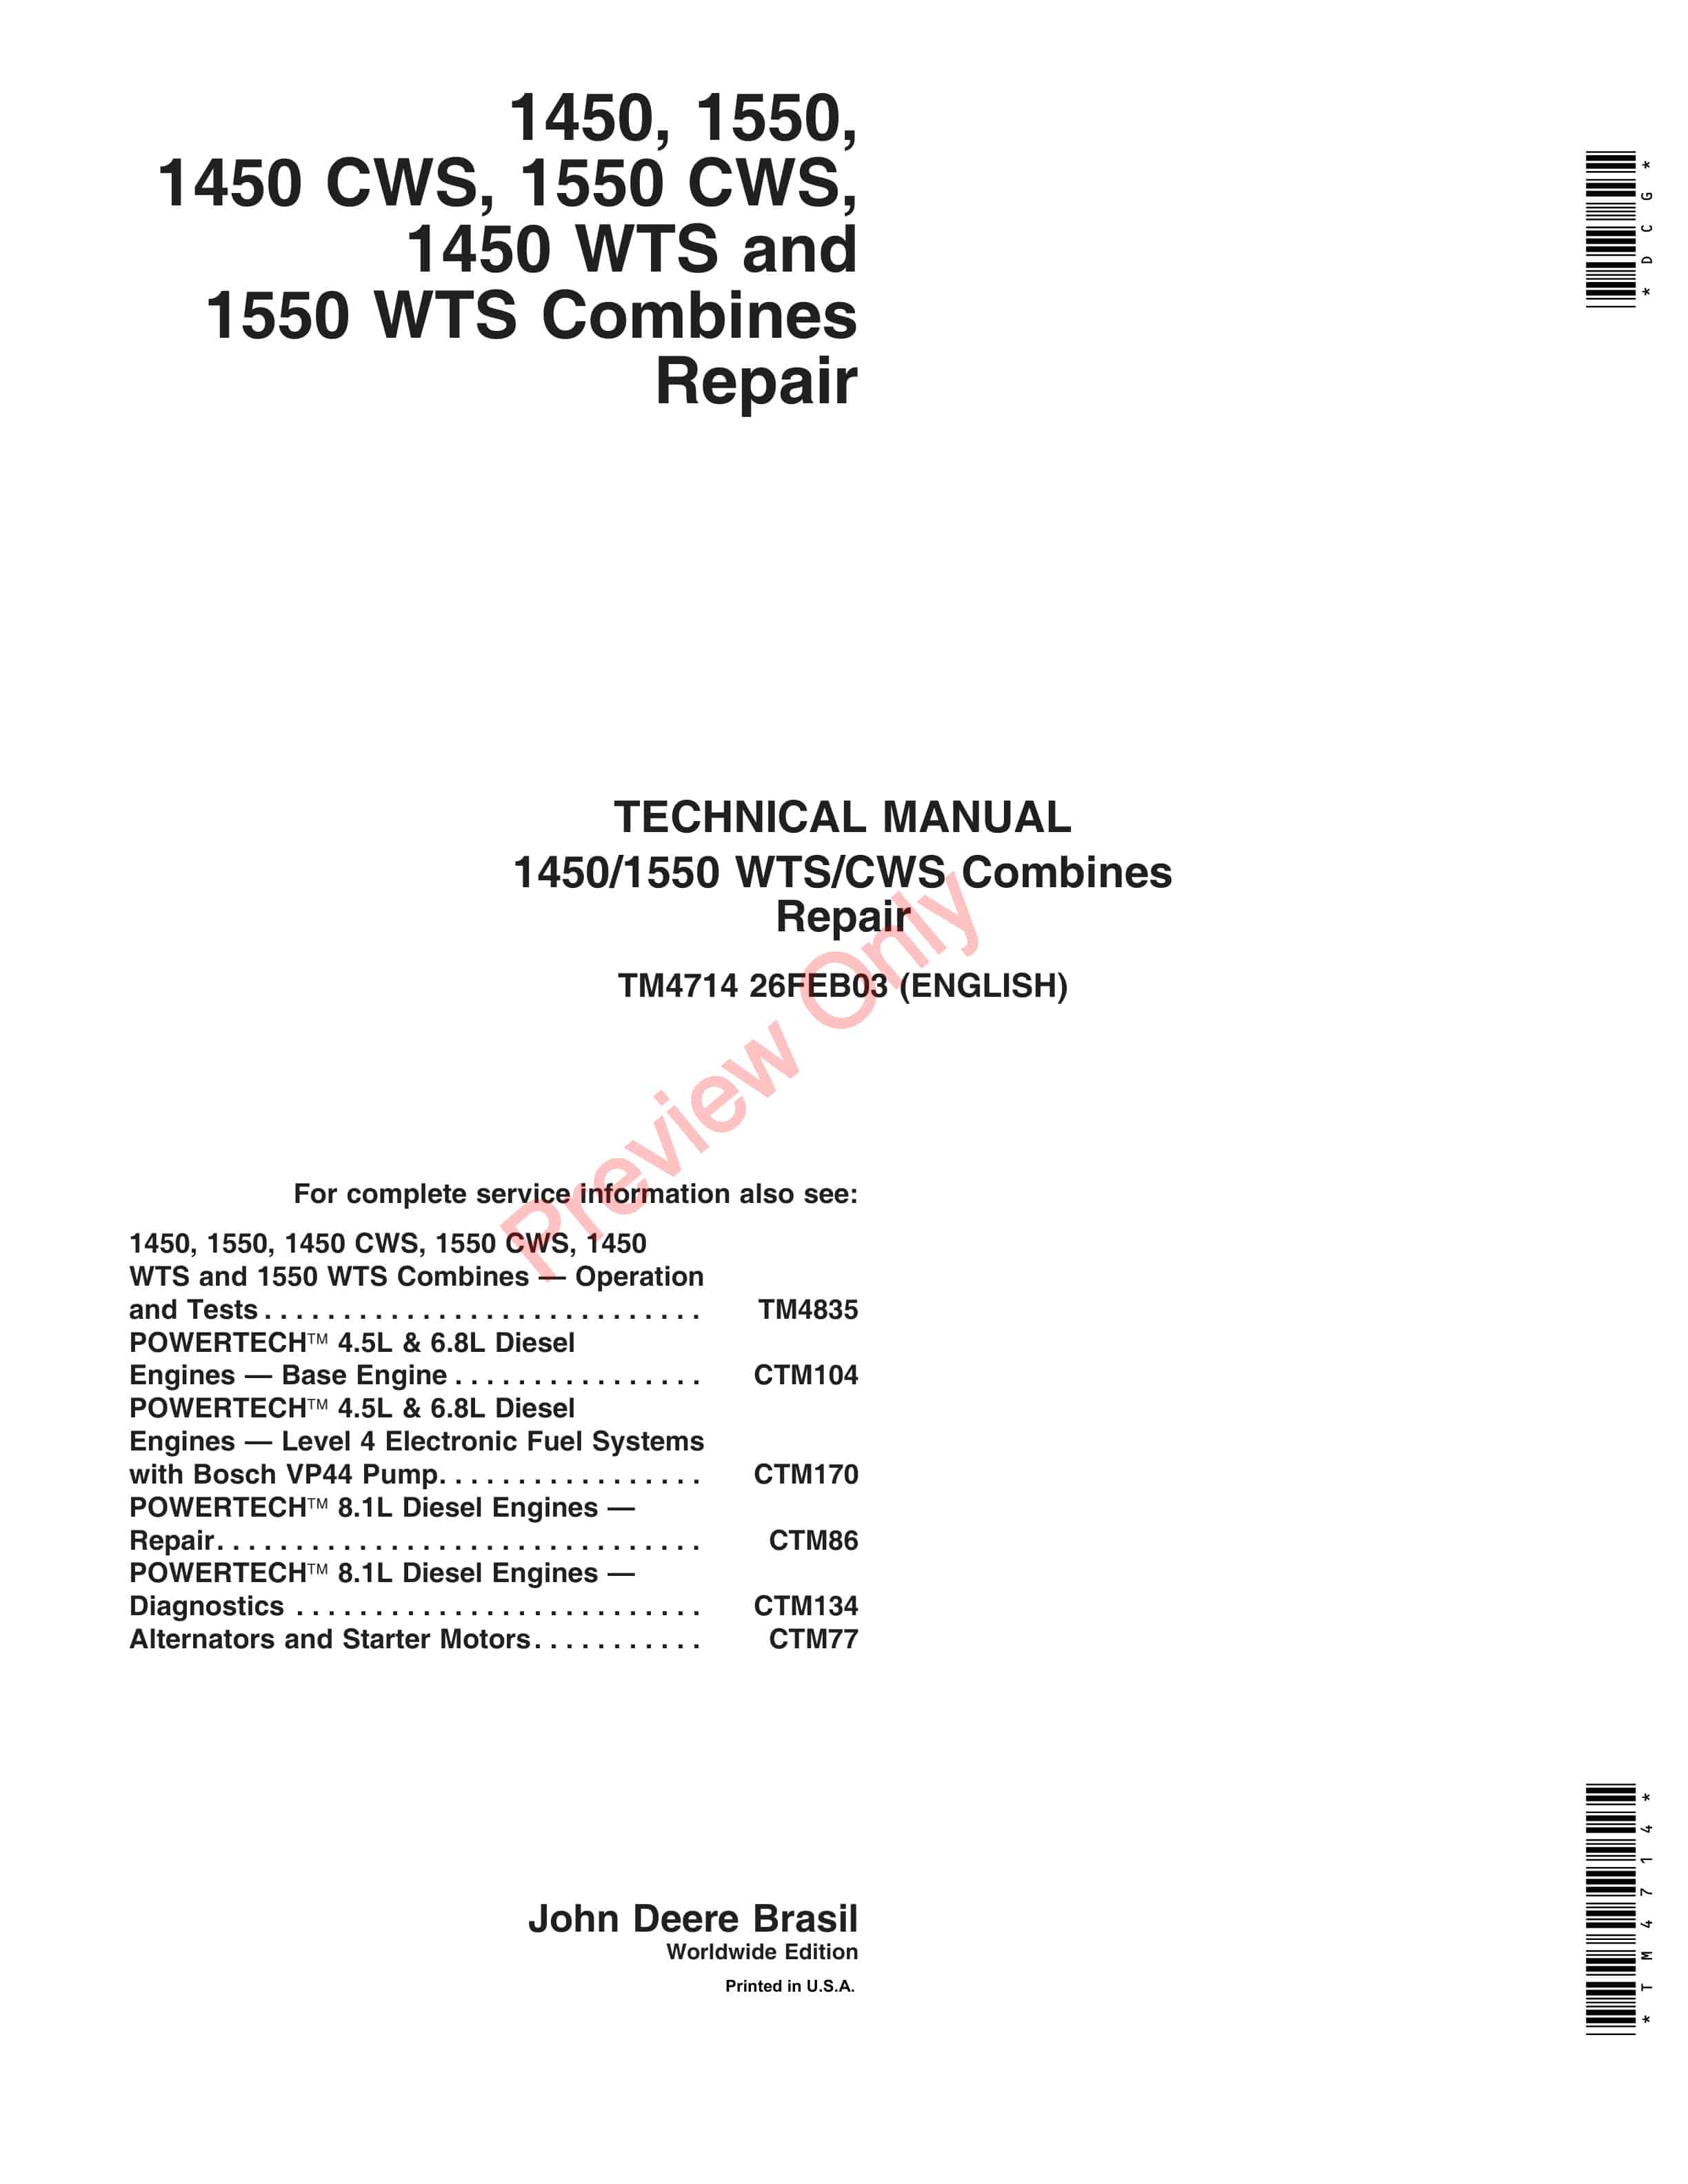 John Deere 1450, 1550, 1450CWS, 1550 CWS, 1450WTS, 1550WTS Combines Technical Manual TM4714 26FEB03-1